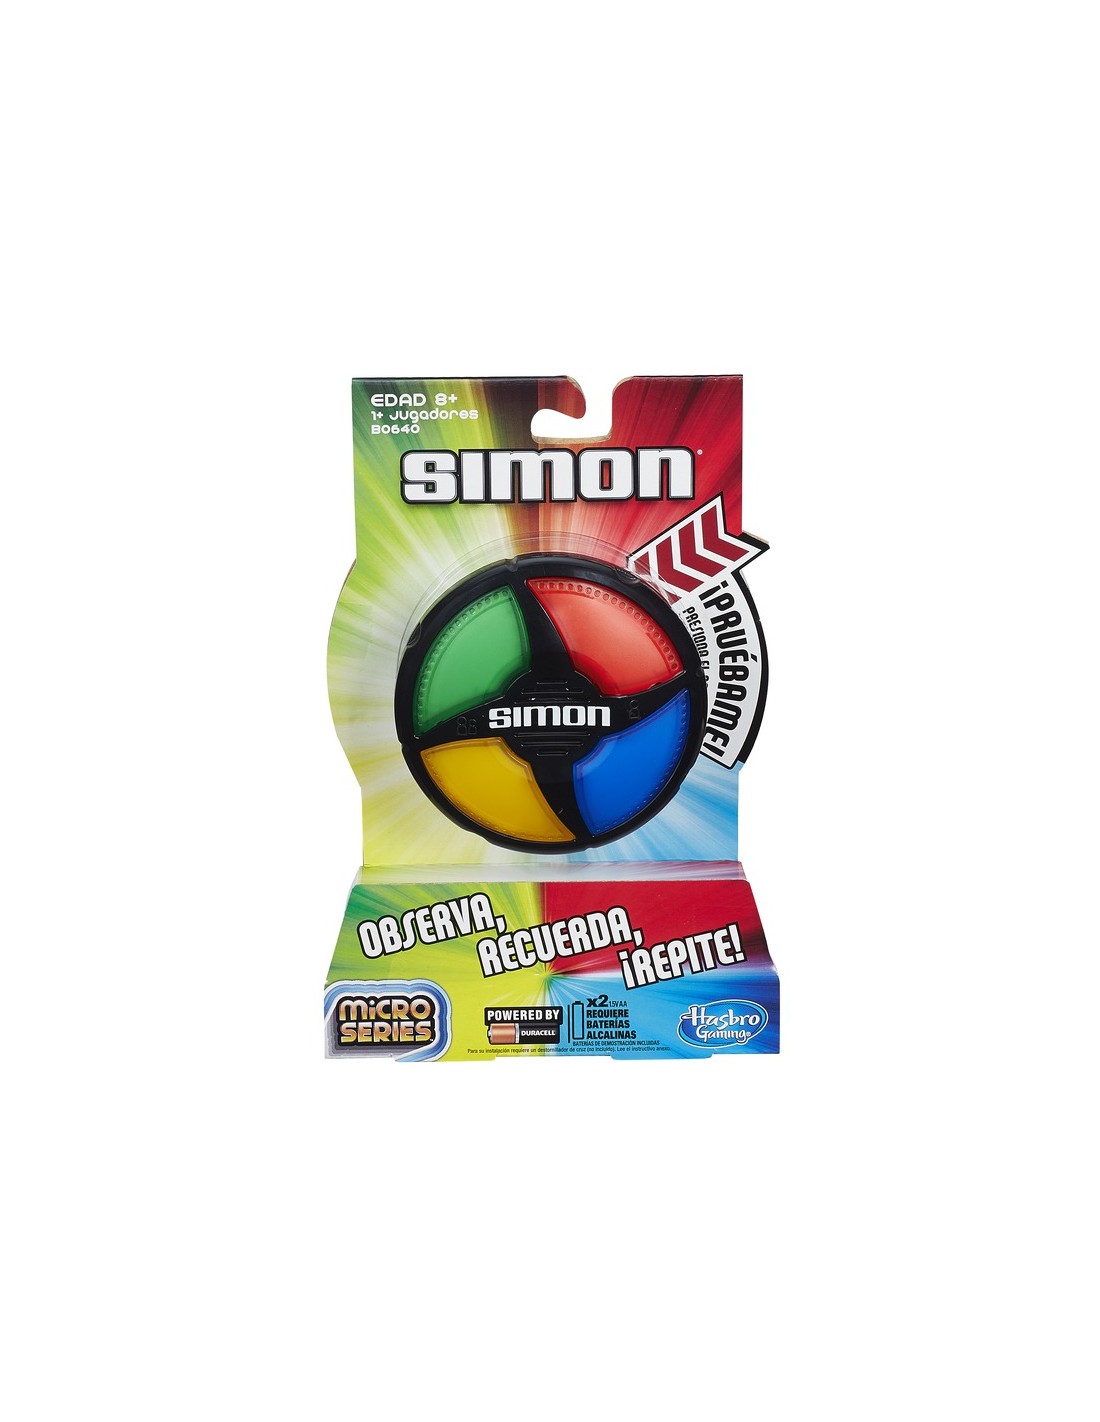 Simon Micro Series Game 